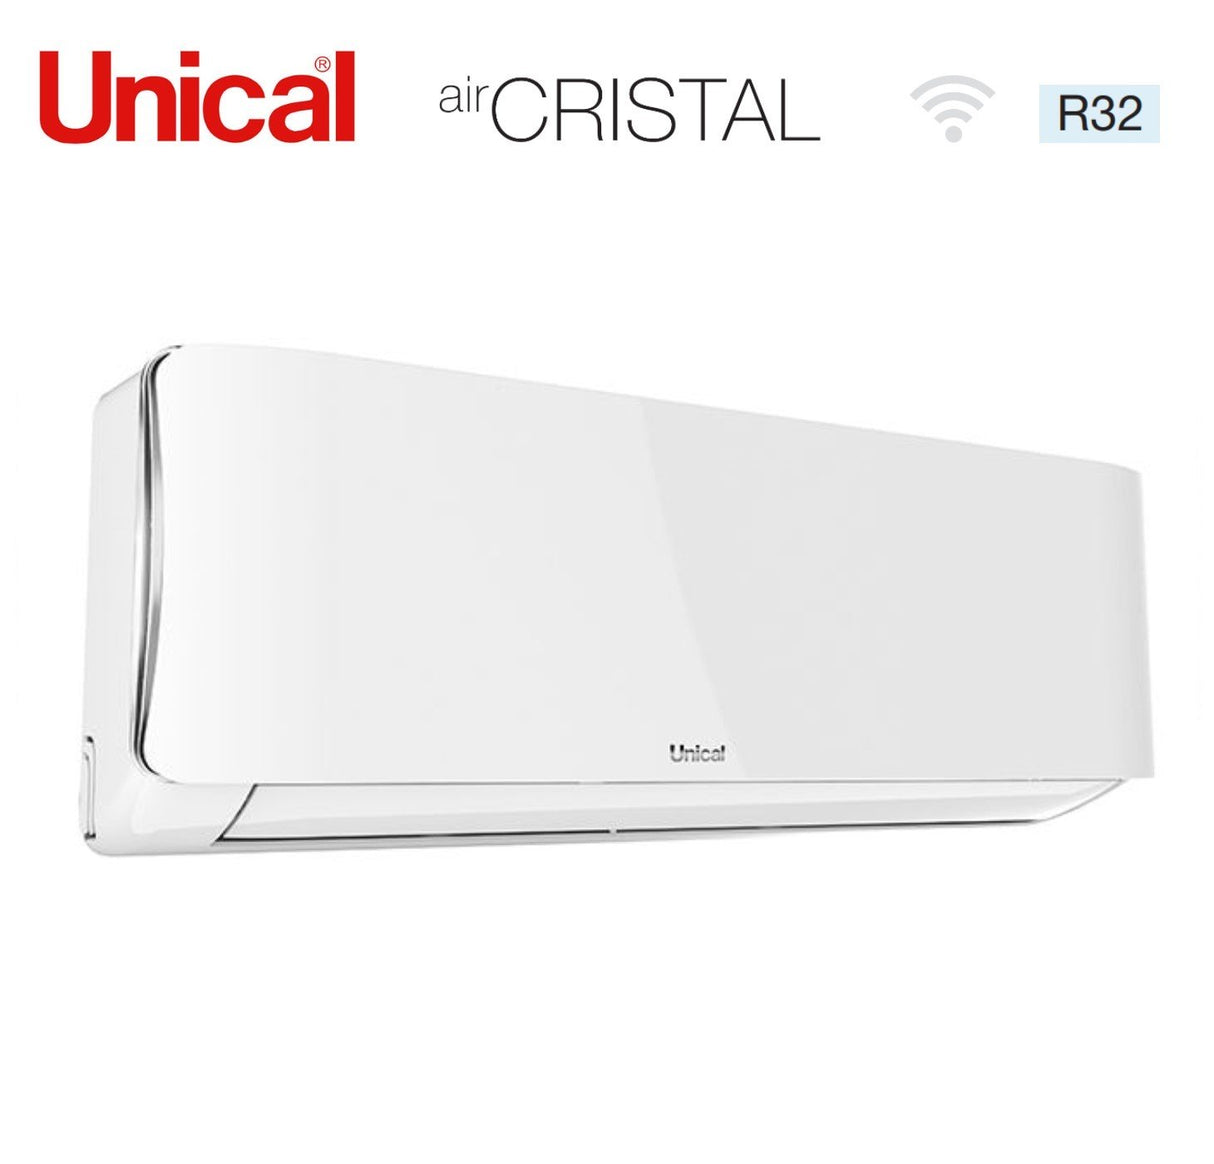 immagine-3-unical-climatizzatore-condizionatore-unical-dual-split-inverter-serie-air-cristal-1818-con-kmx4-36he-r-32-wi-fi-optional-1800018000-ean-8059657019769